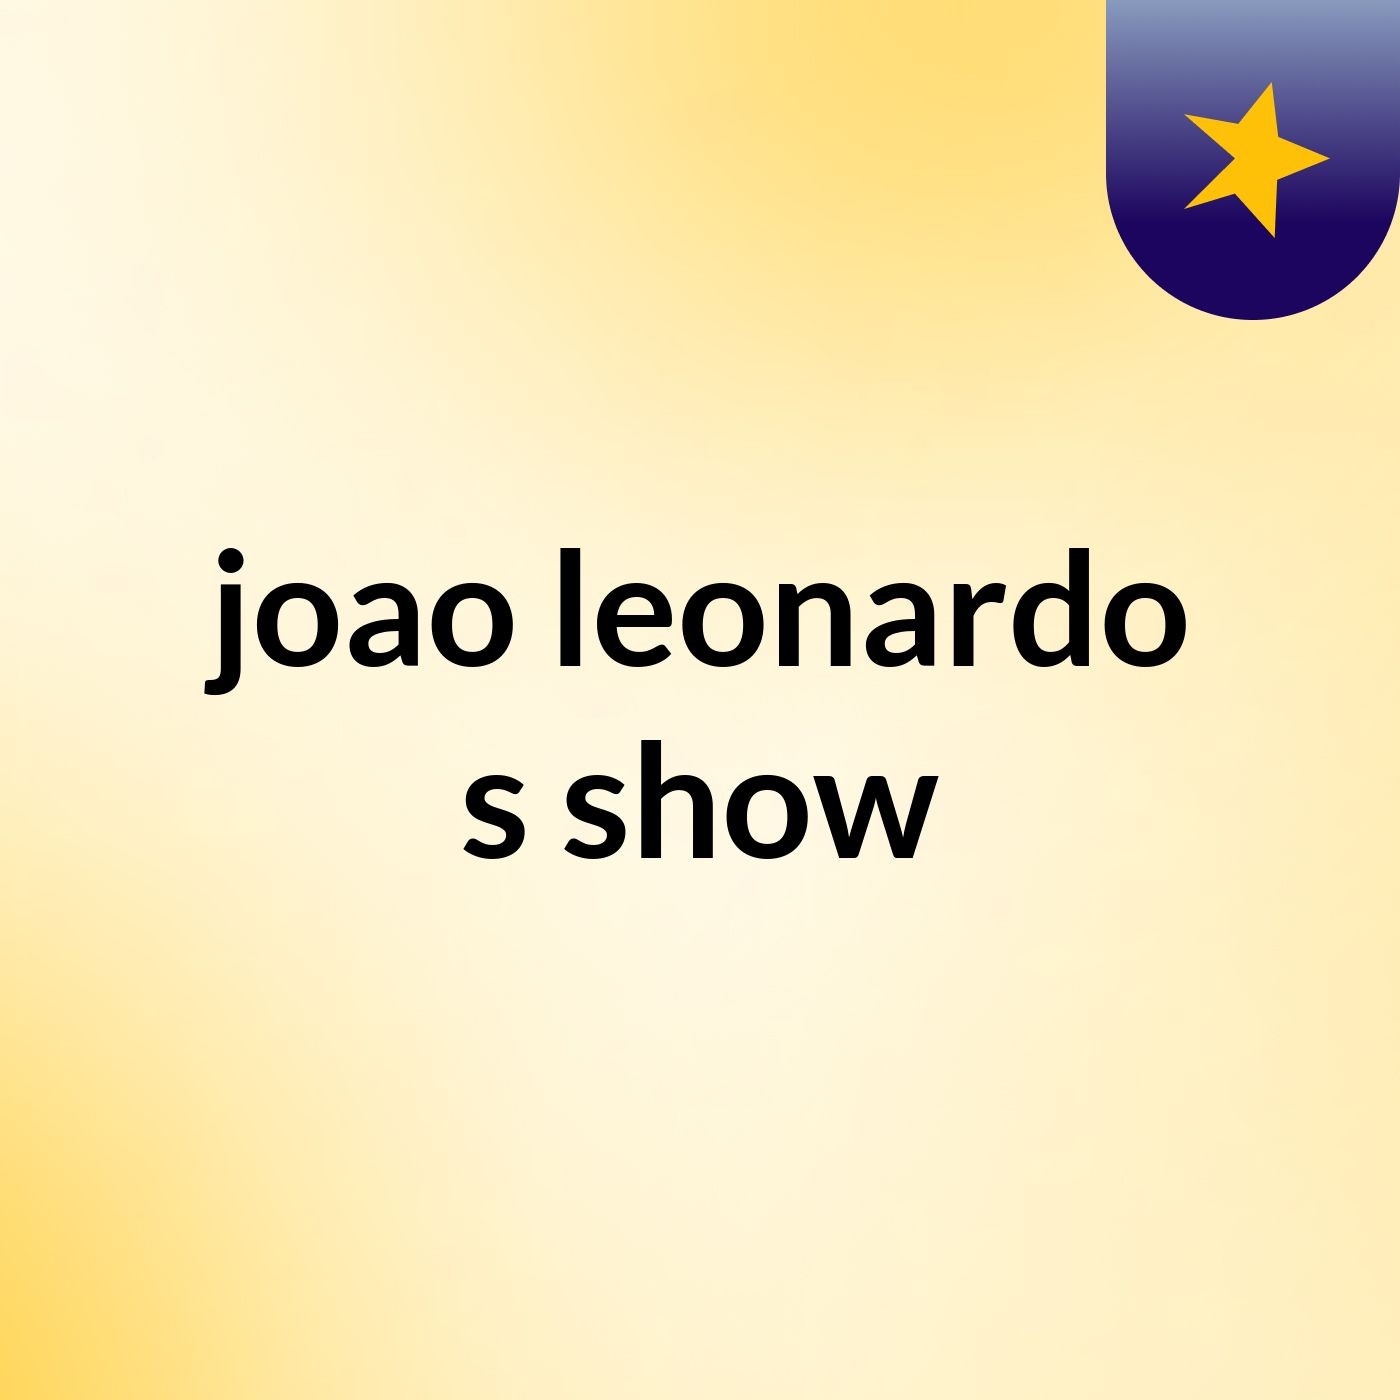 joao leonardo's show